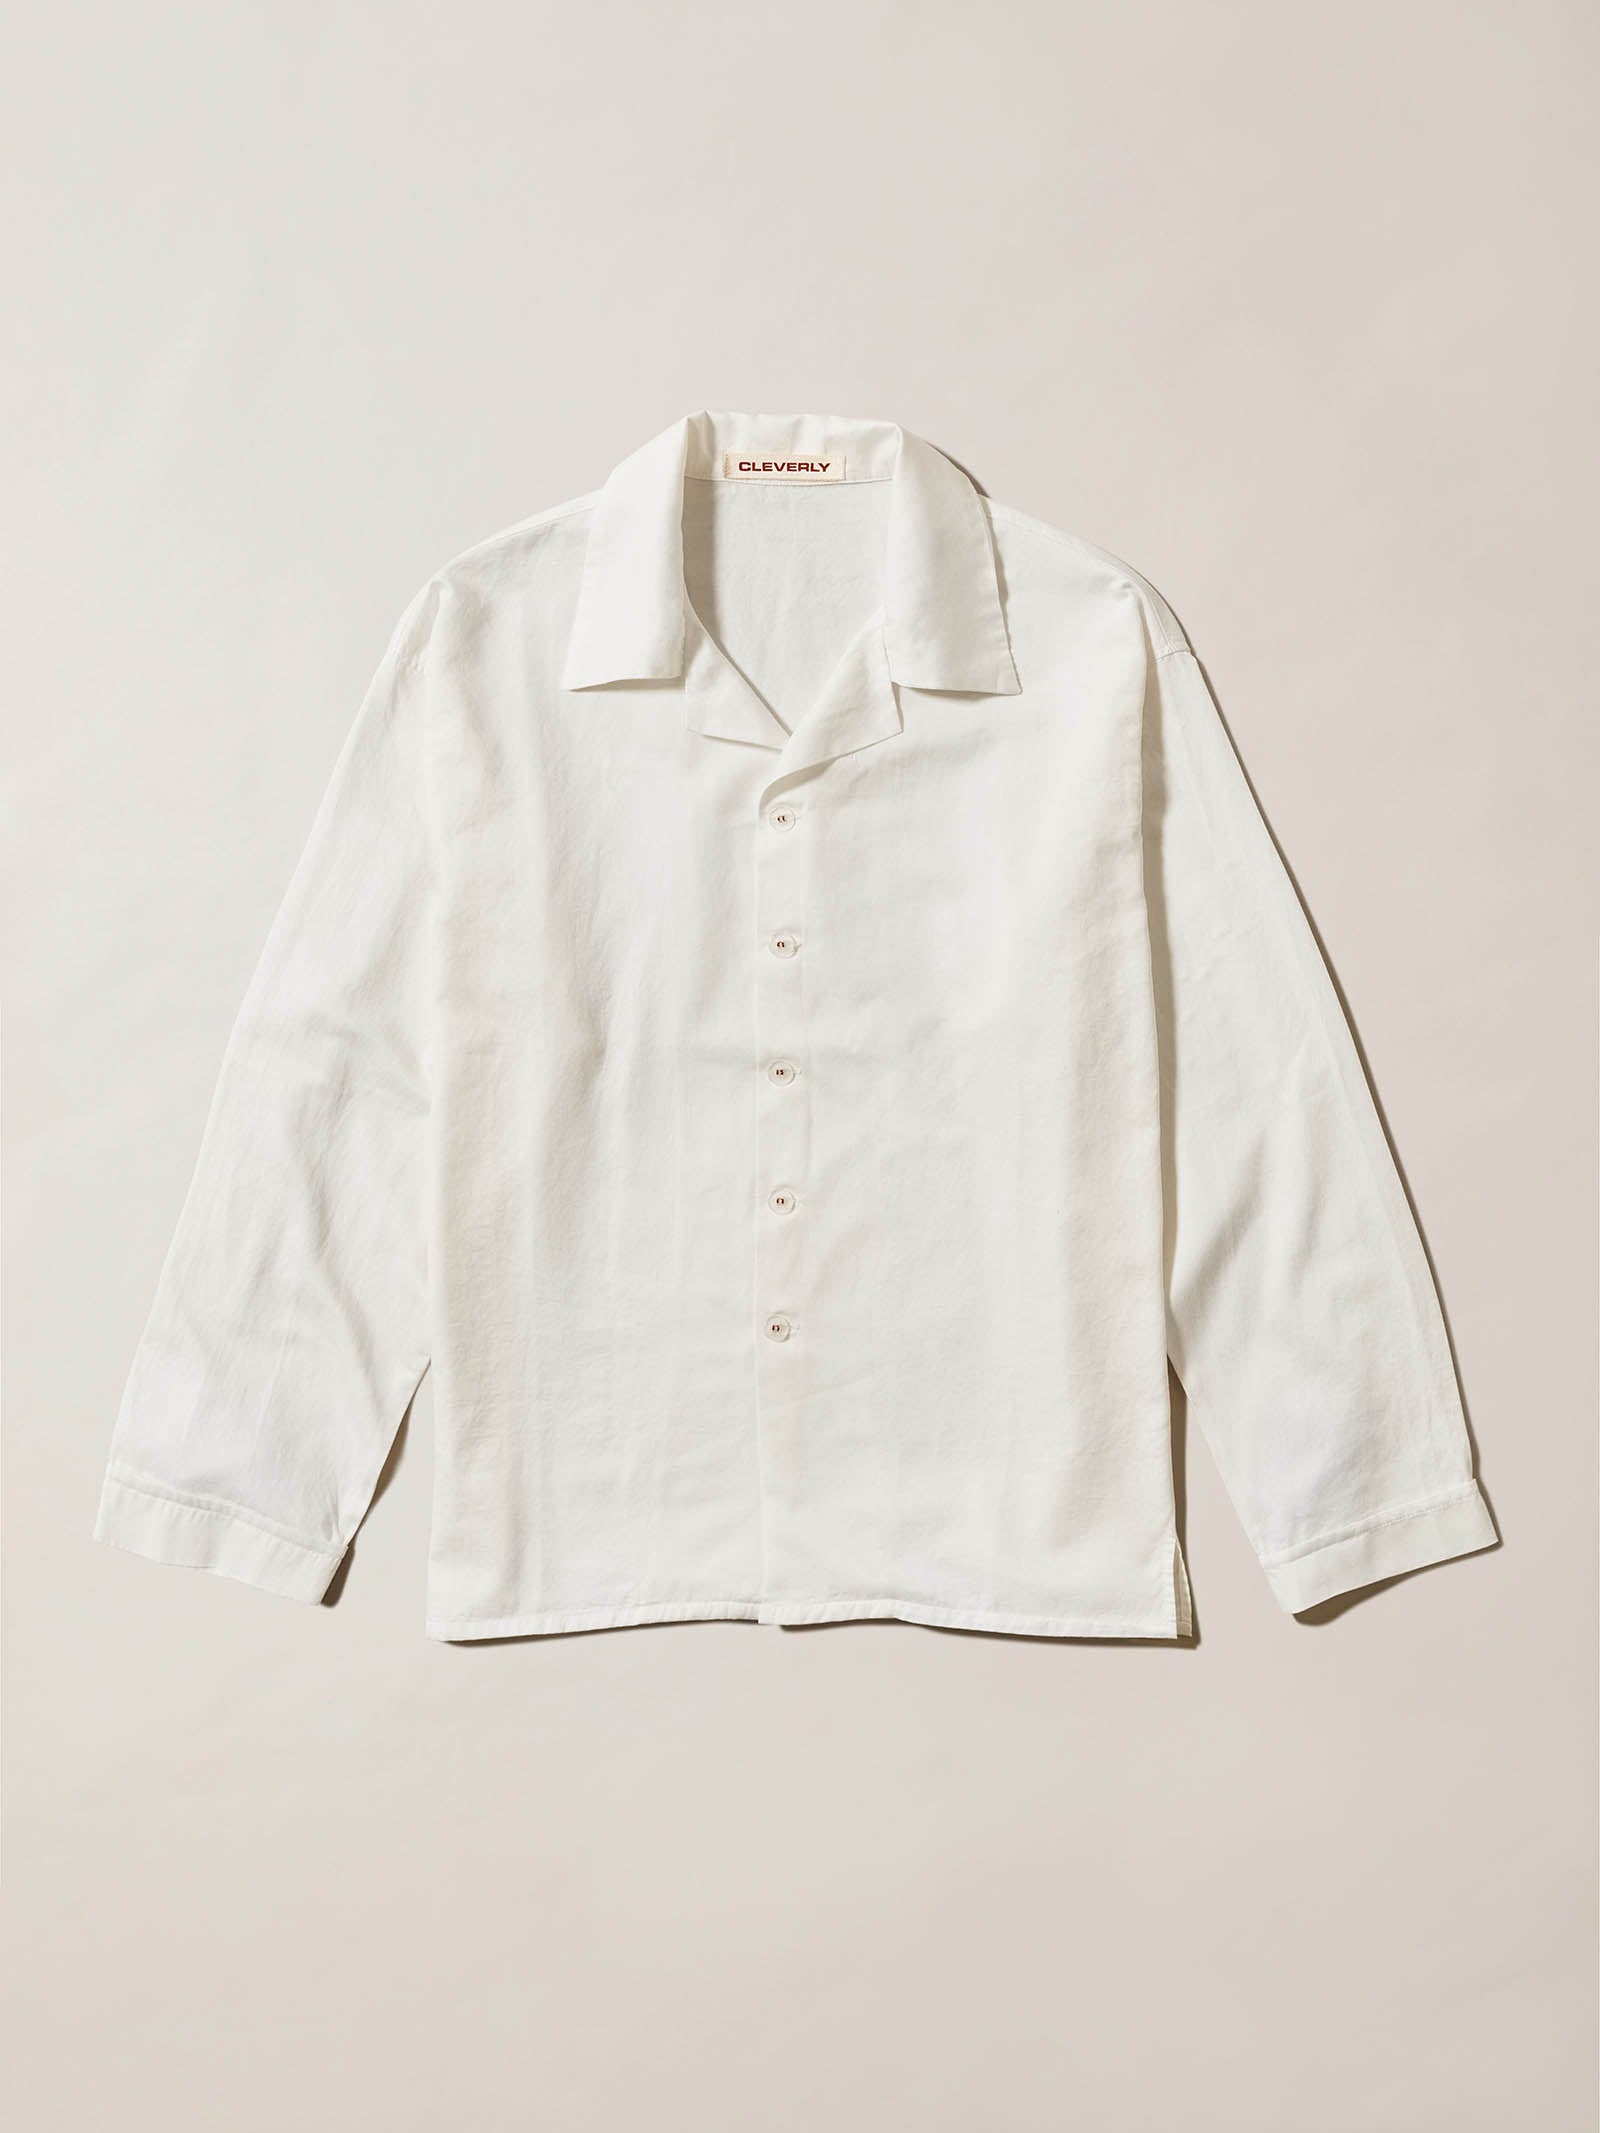 100% cotton pyjamas, soft long sleeve shirt, long sleeve pyjama shirt, white lounge shirt